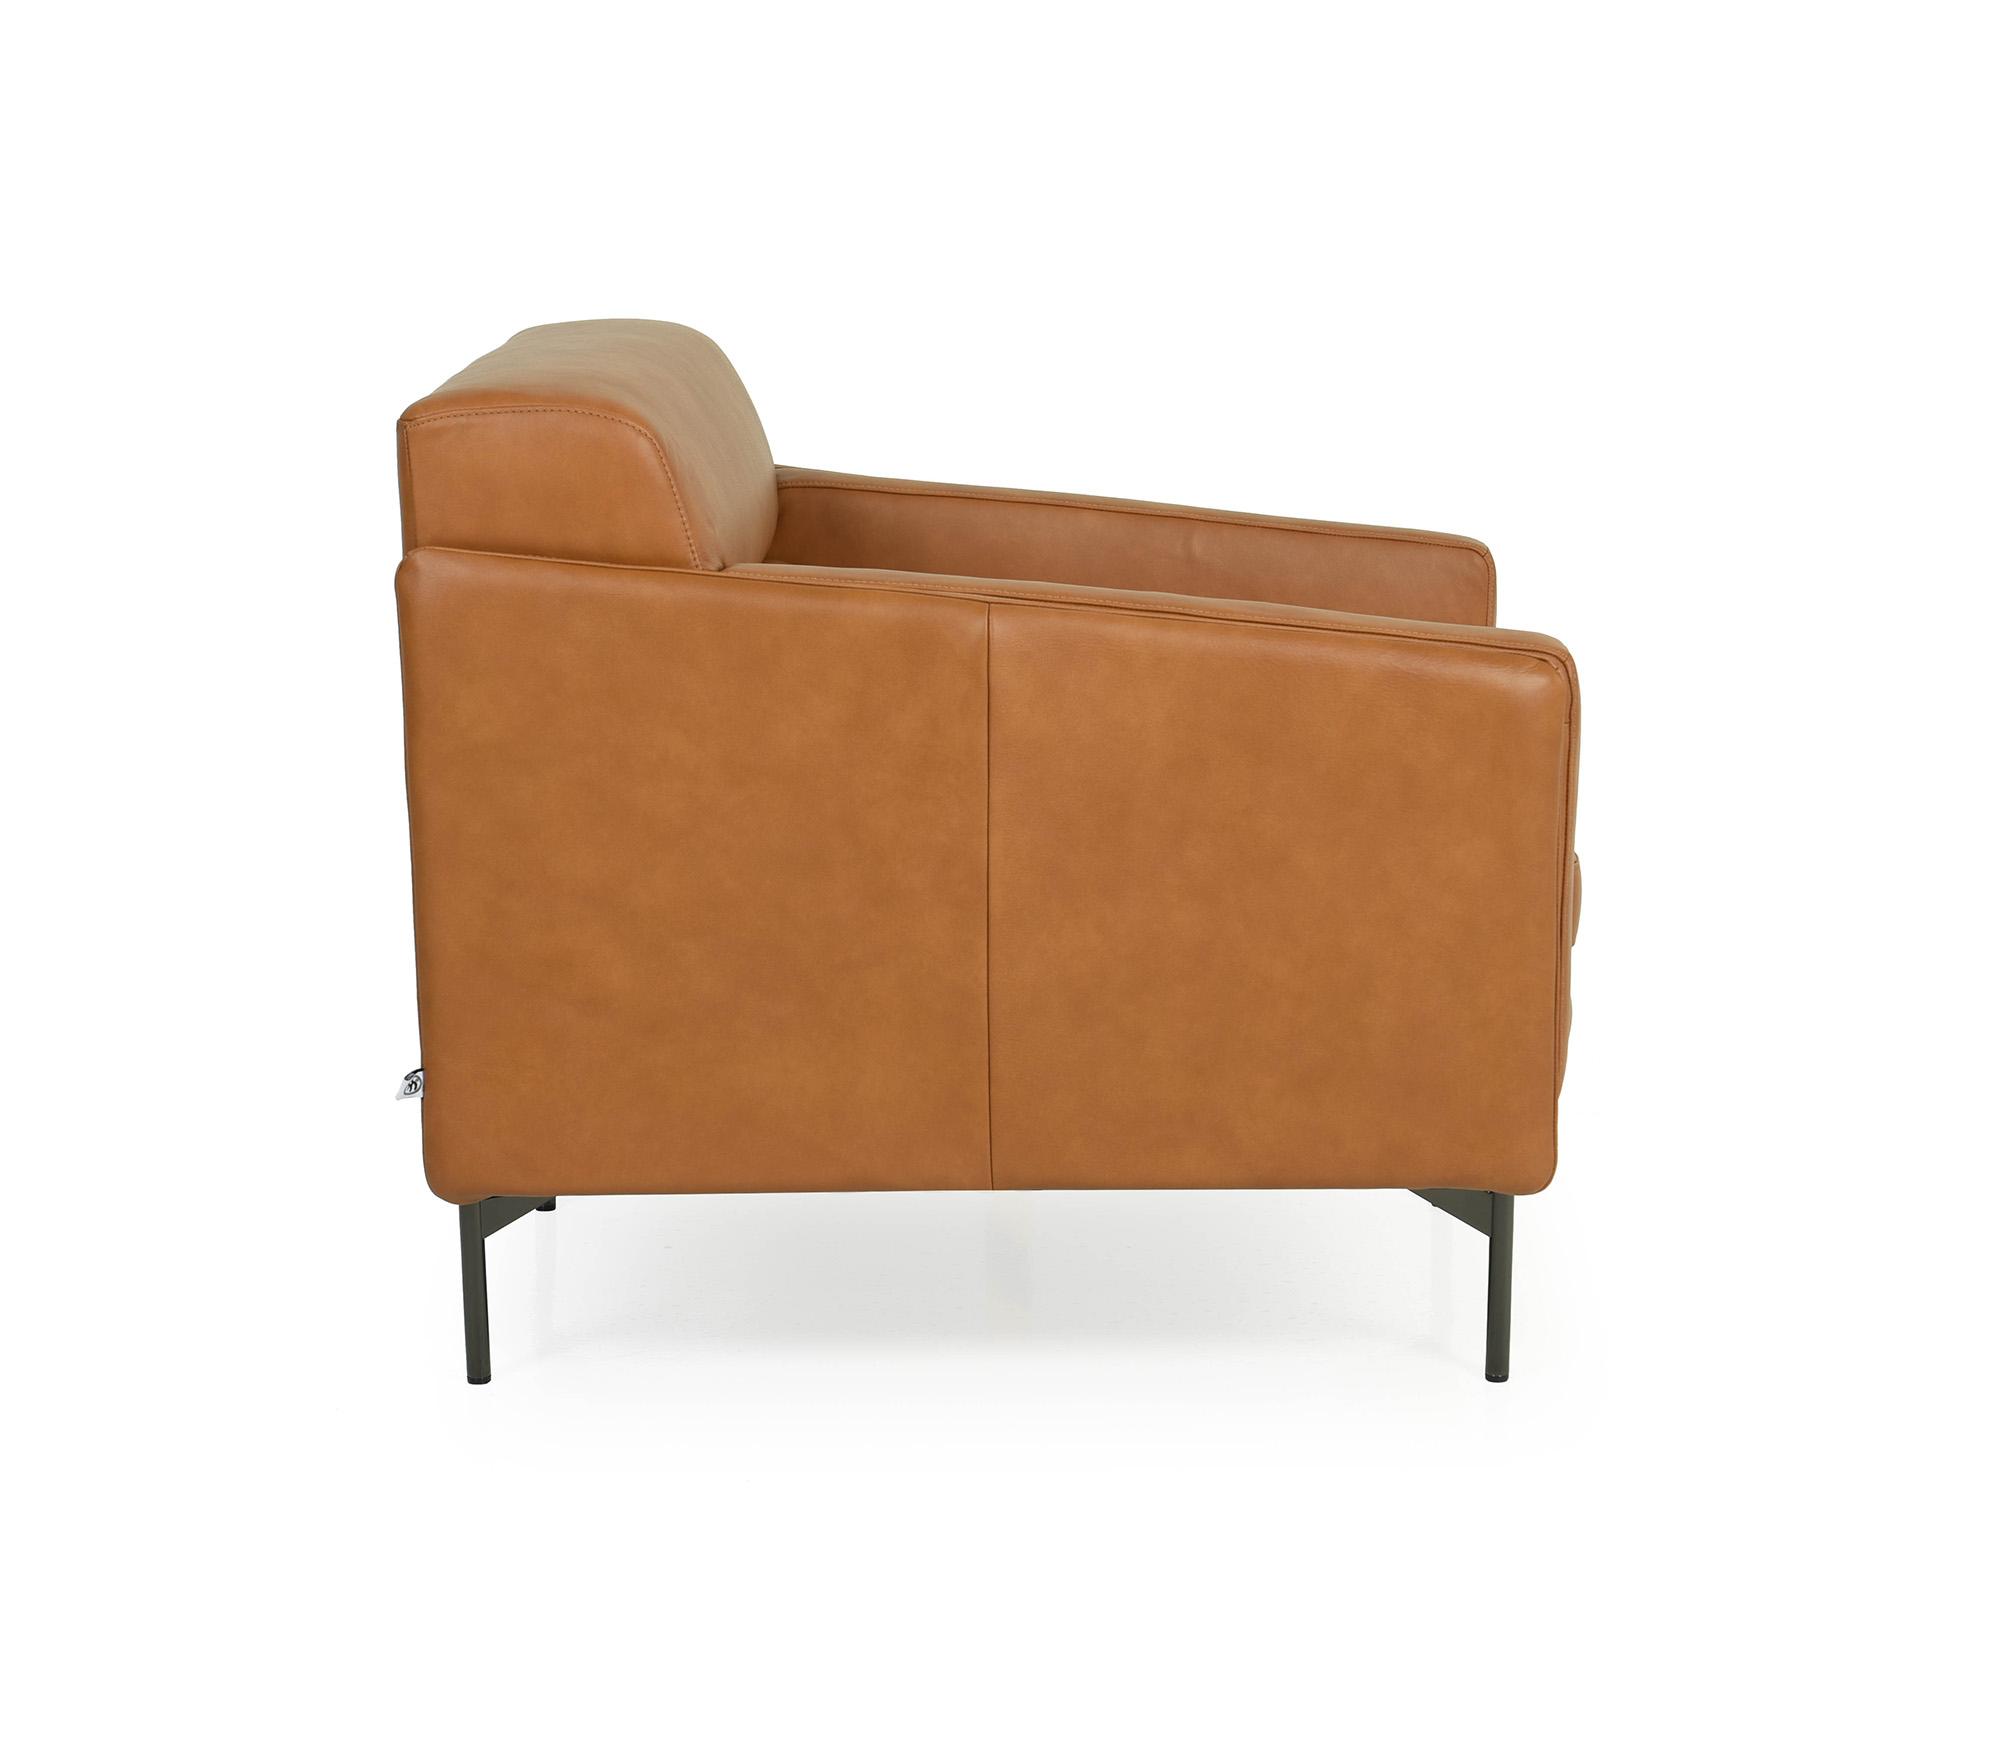 

    
Tan Genuine Leather Sofa Set 3Pcs McCoy 442 Moroni Contemporary
